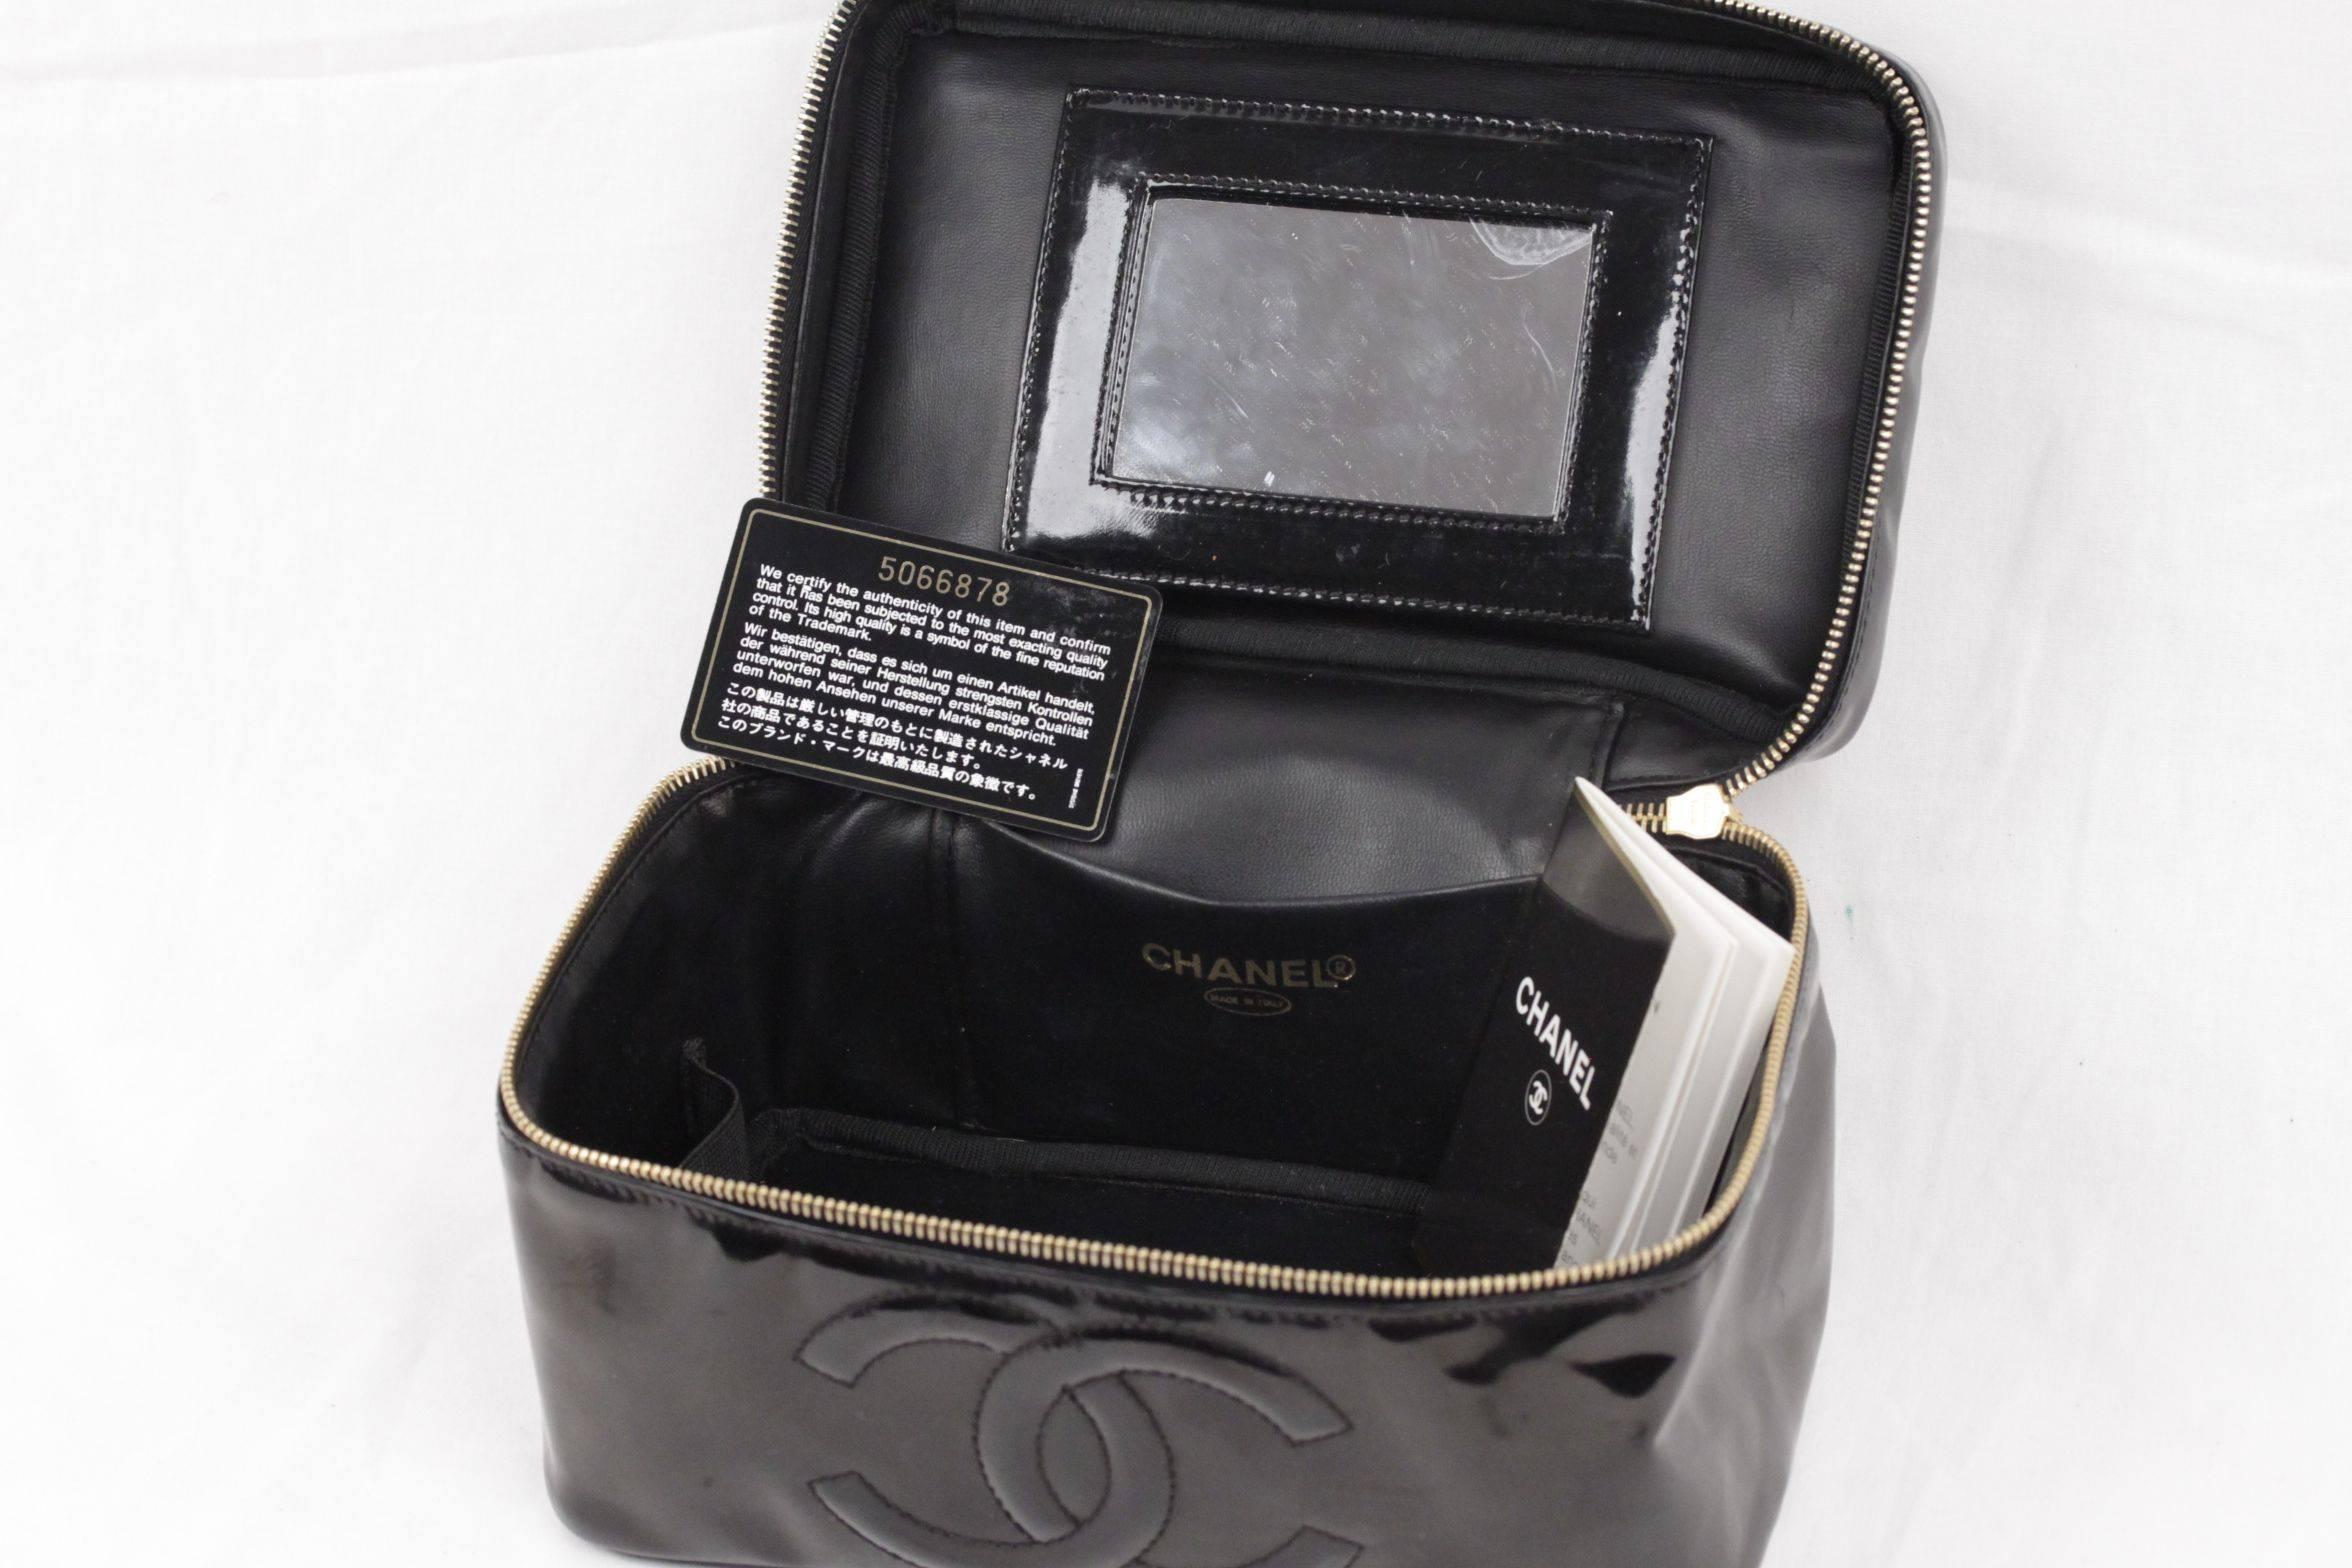 CHANEL Black Patent Leather COSMETIC BAG Vanity Case HANDBAG Purse 1